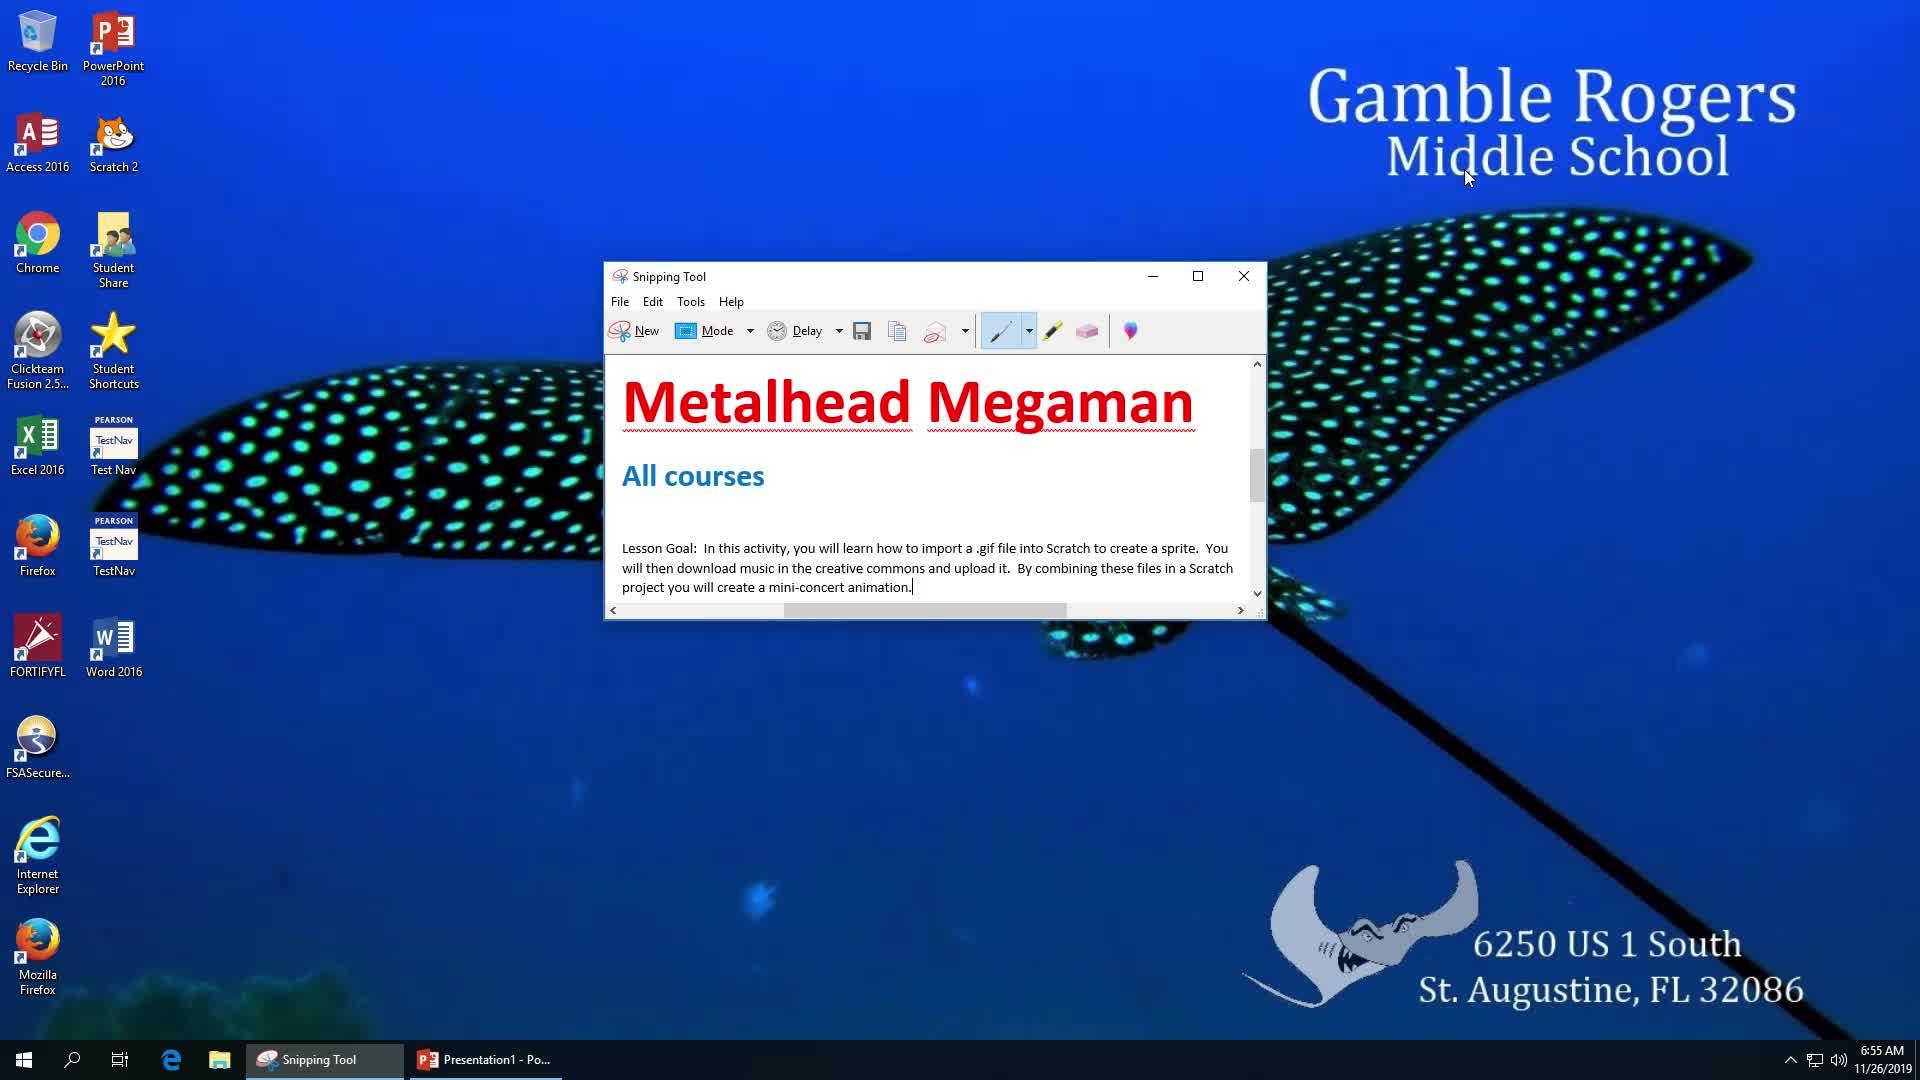 Metalhead Megaman Video Instructions